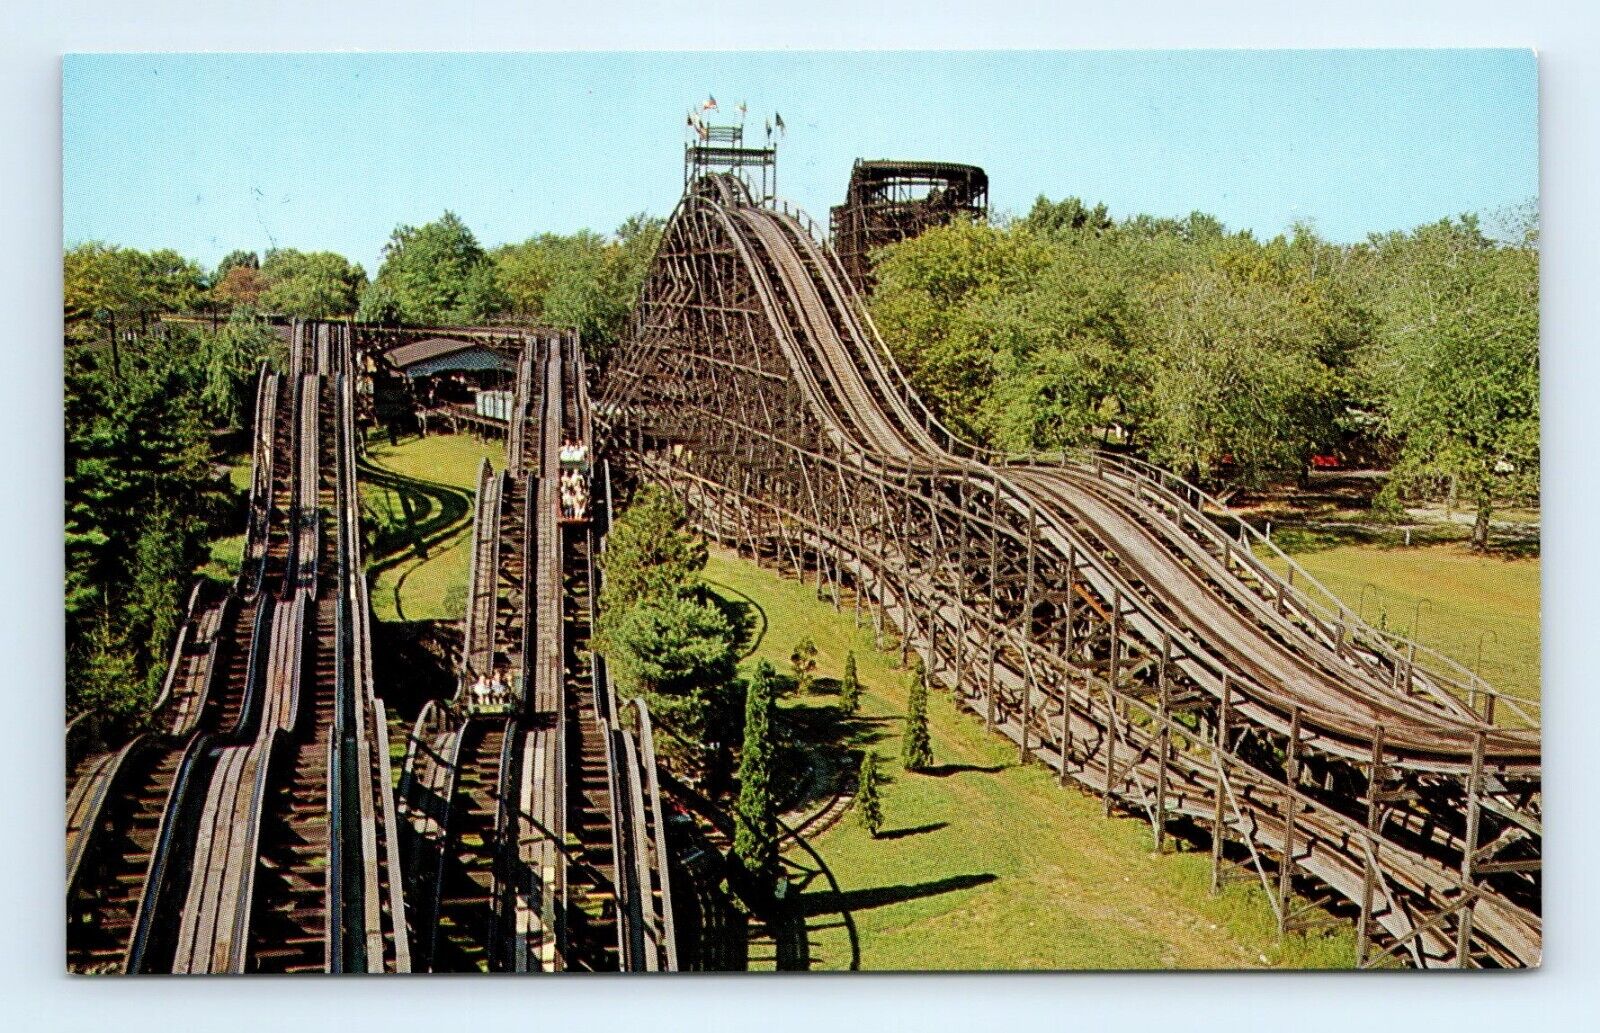 Rollercoaster Wood High Rides Euclid Beach Park Cleveland OH Postcard